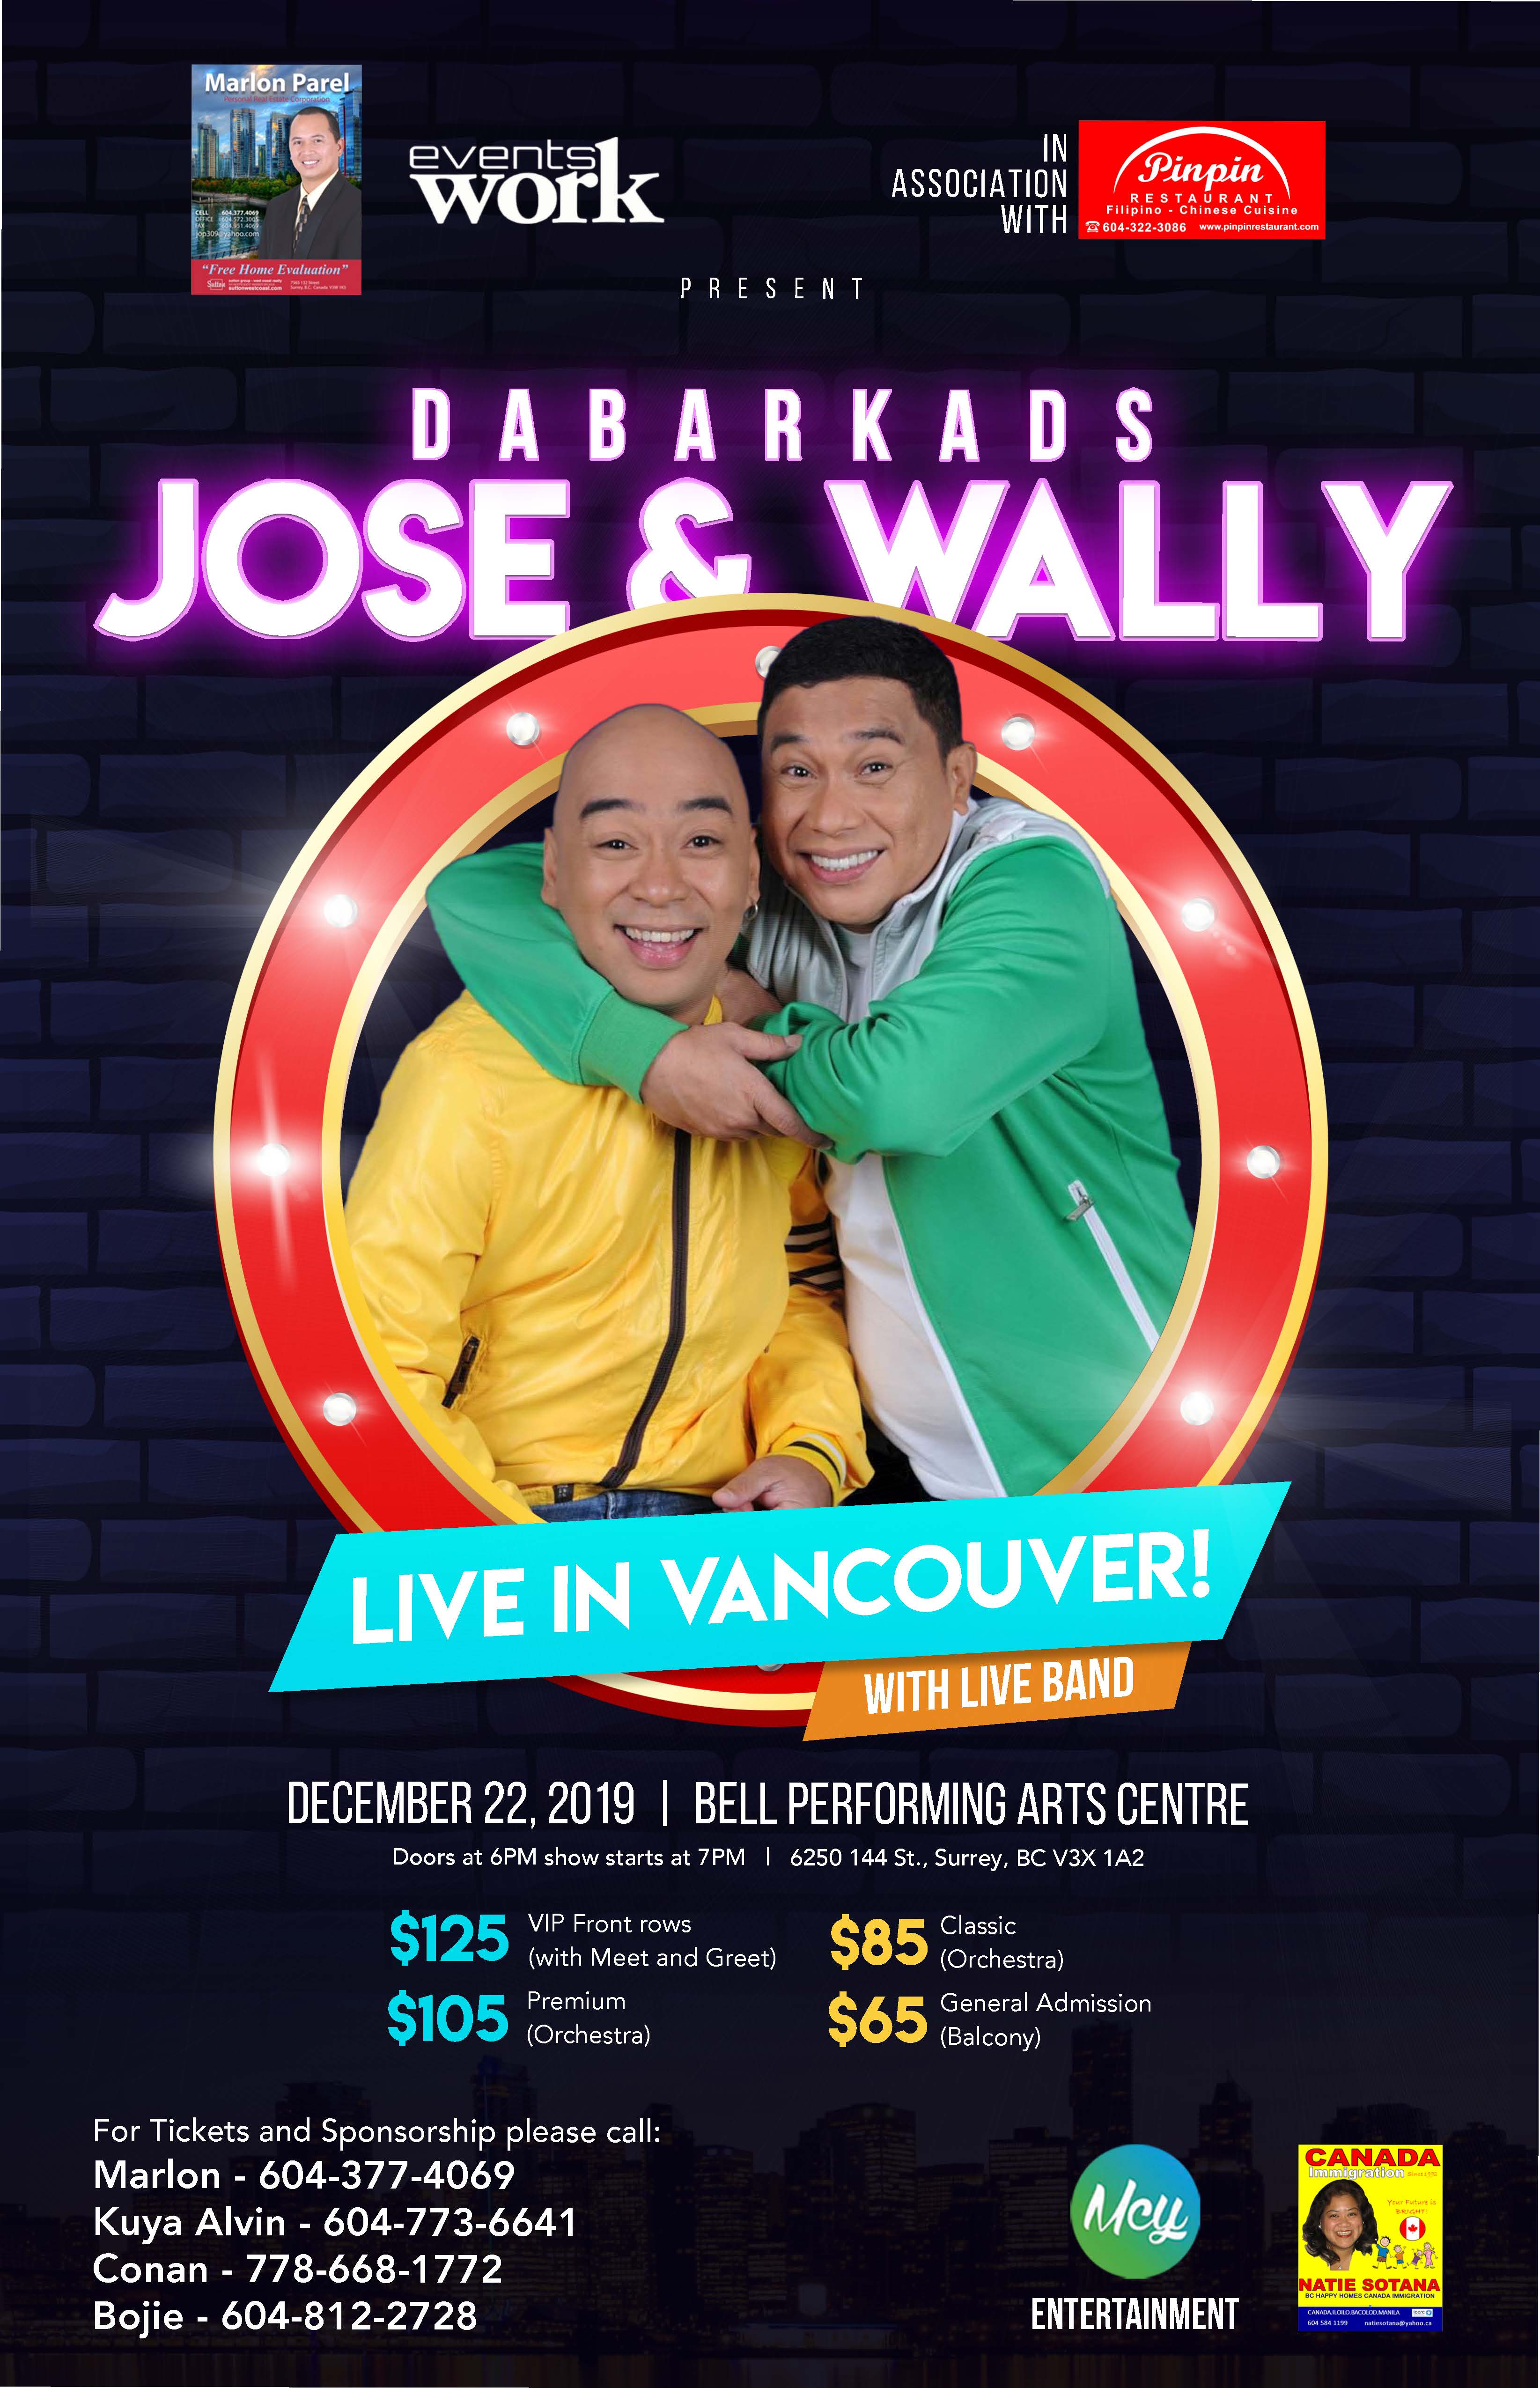 Jose and Wally